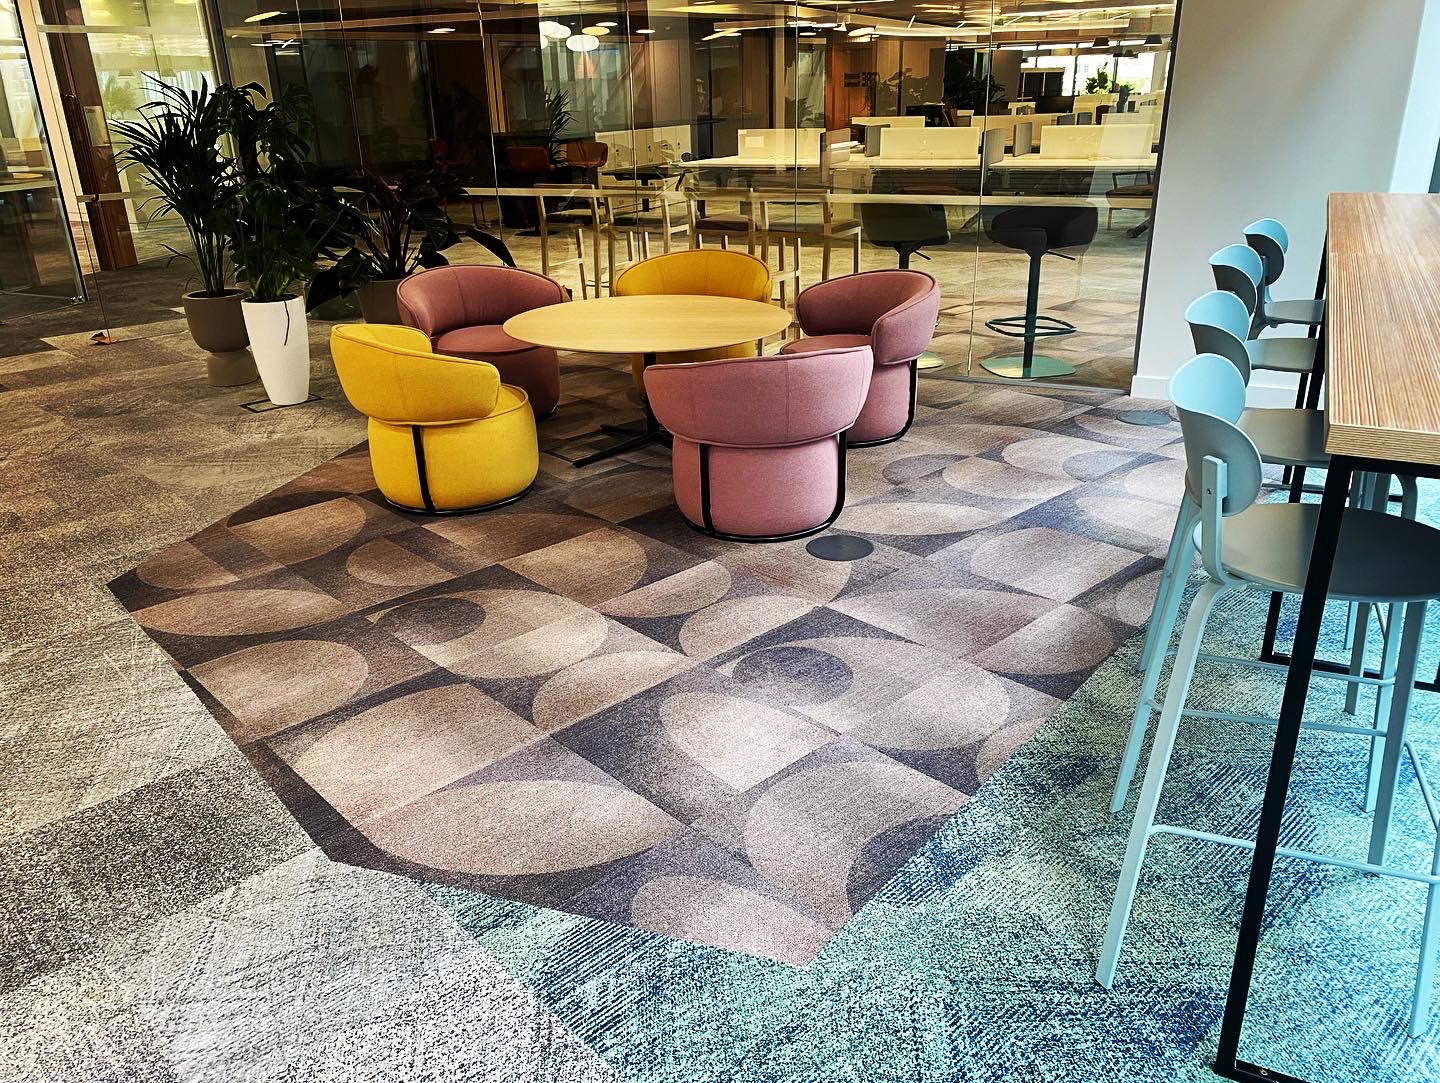 Milliken Carpet Tiles - Loughton Contracts - London